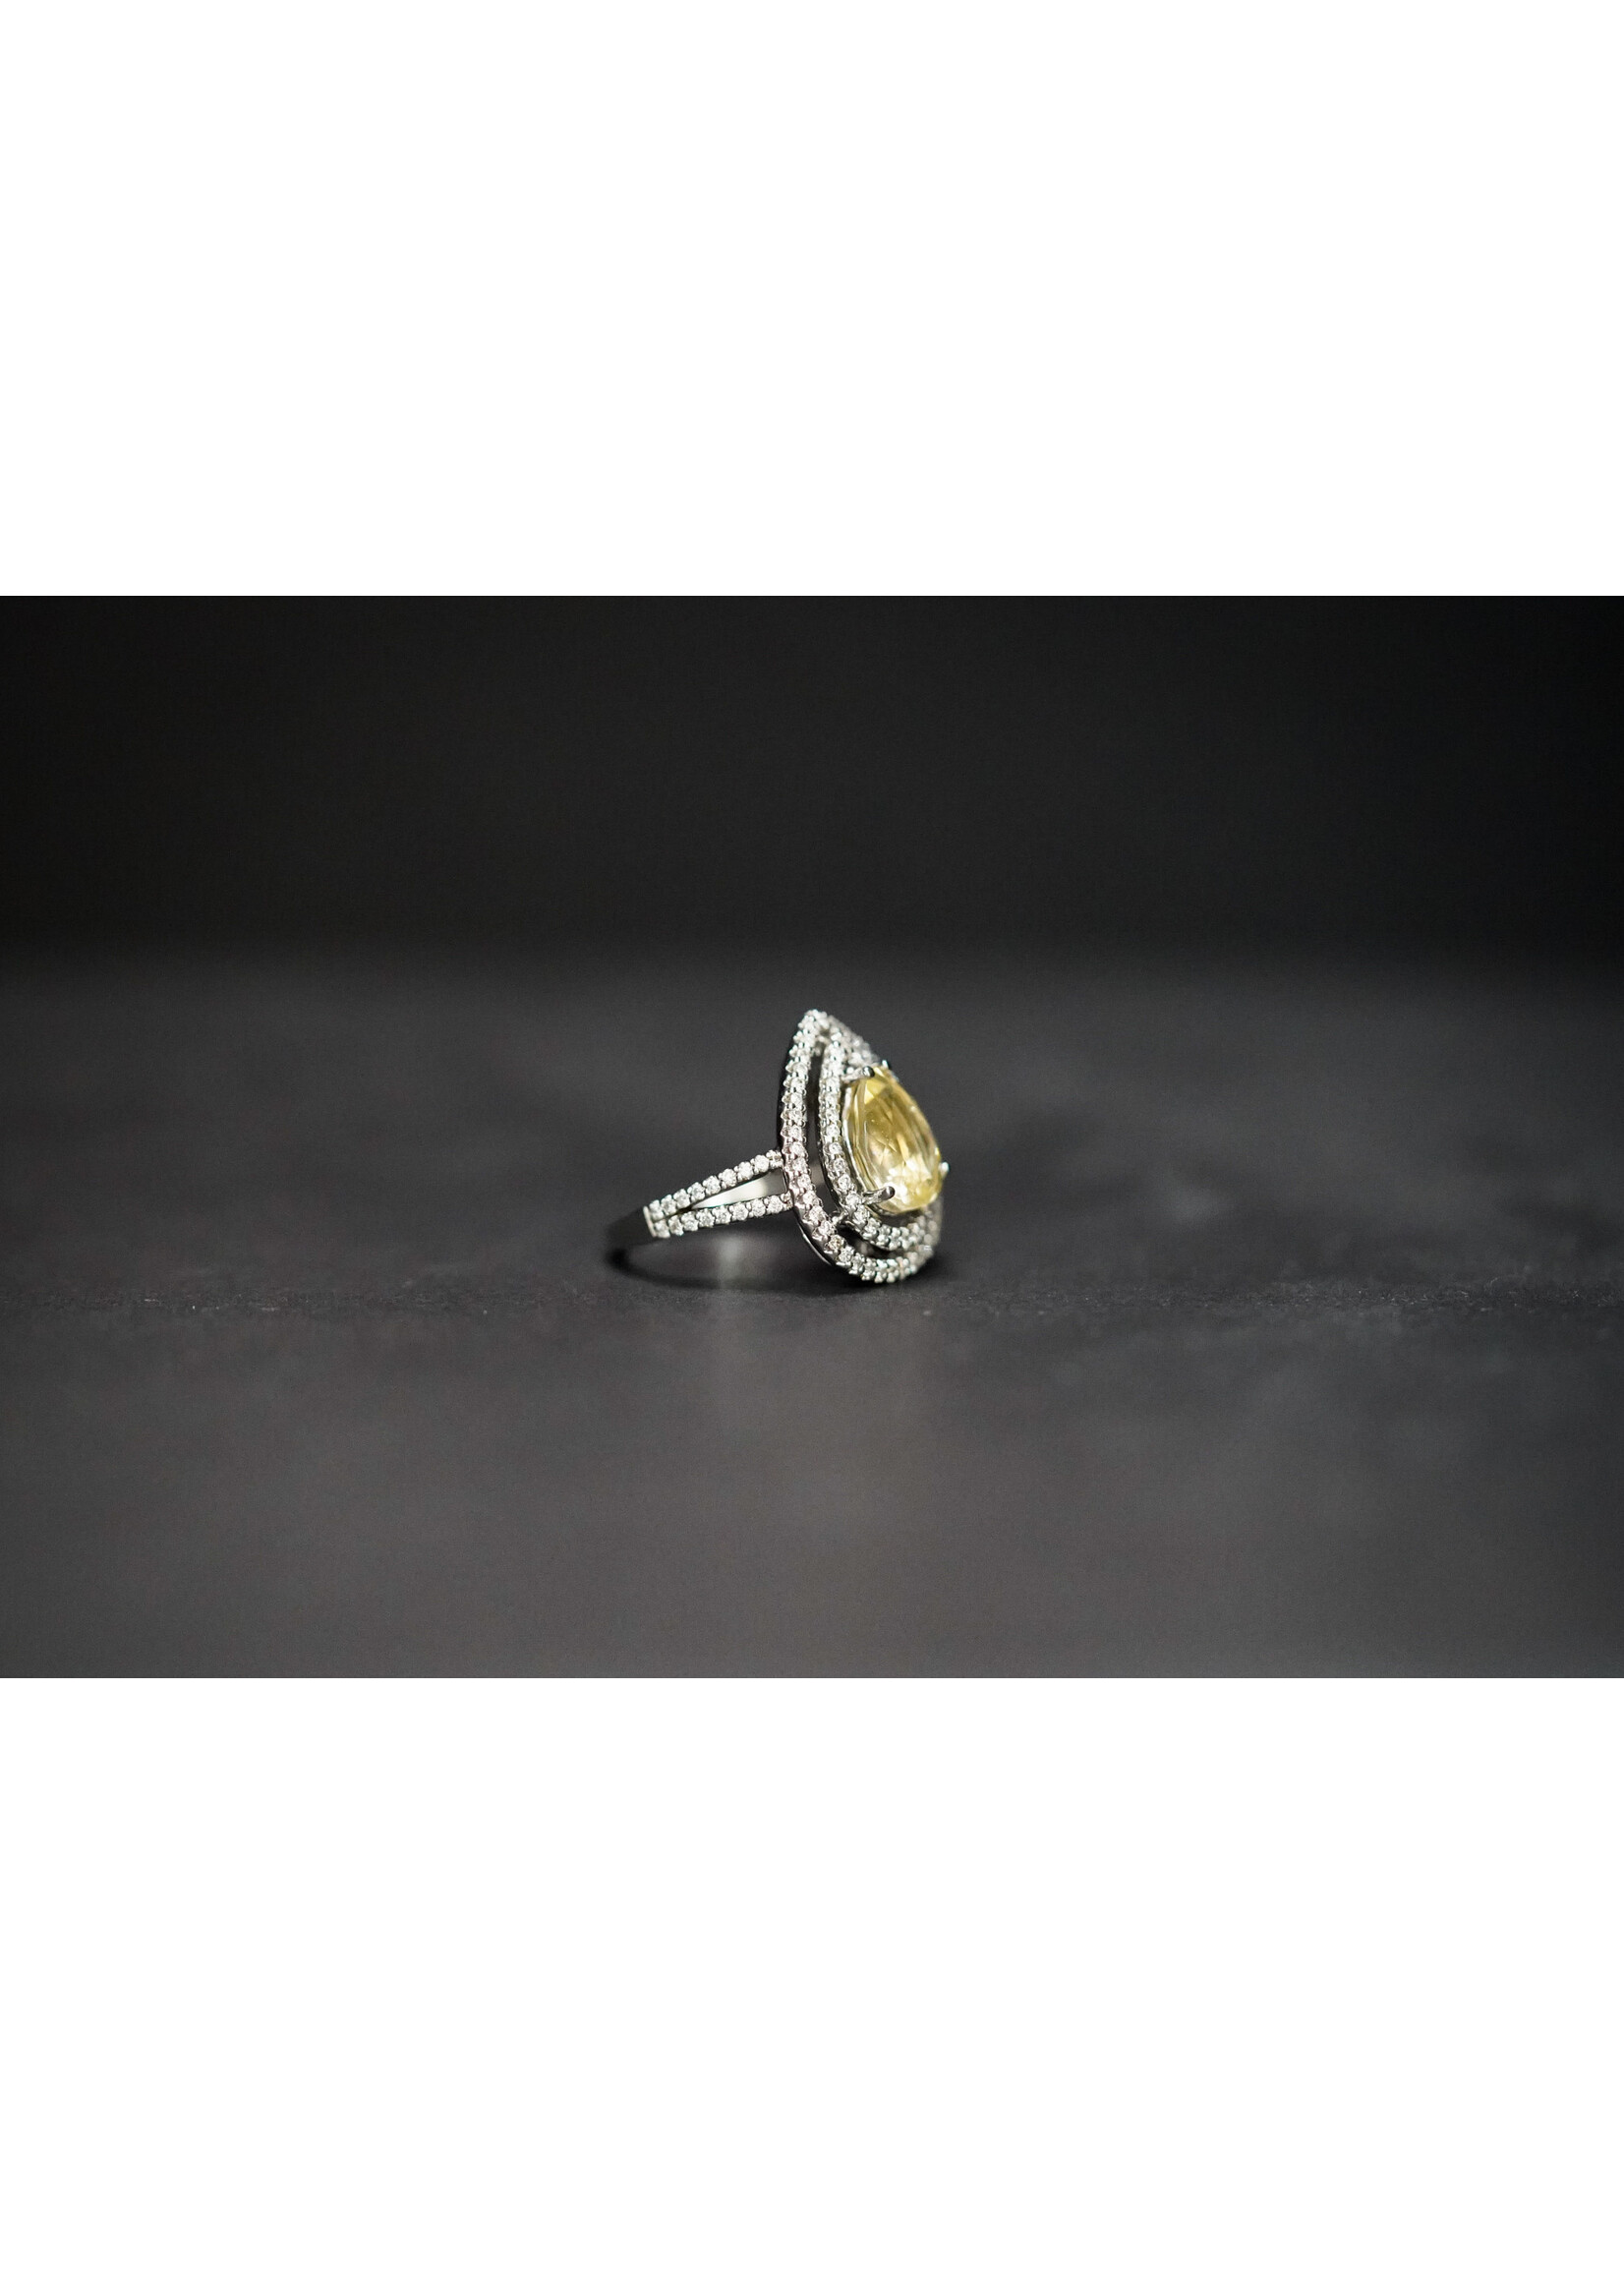 14KW 6.89g 3.82ctw (3.27ctr) Yellow Sapphire & Diamond Double Halo Fashion Ring (size 6)